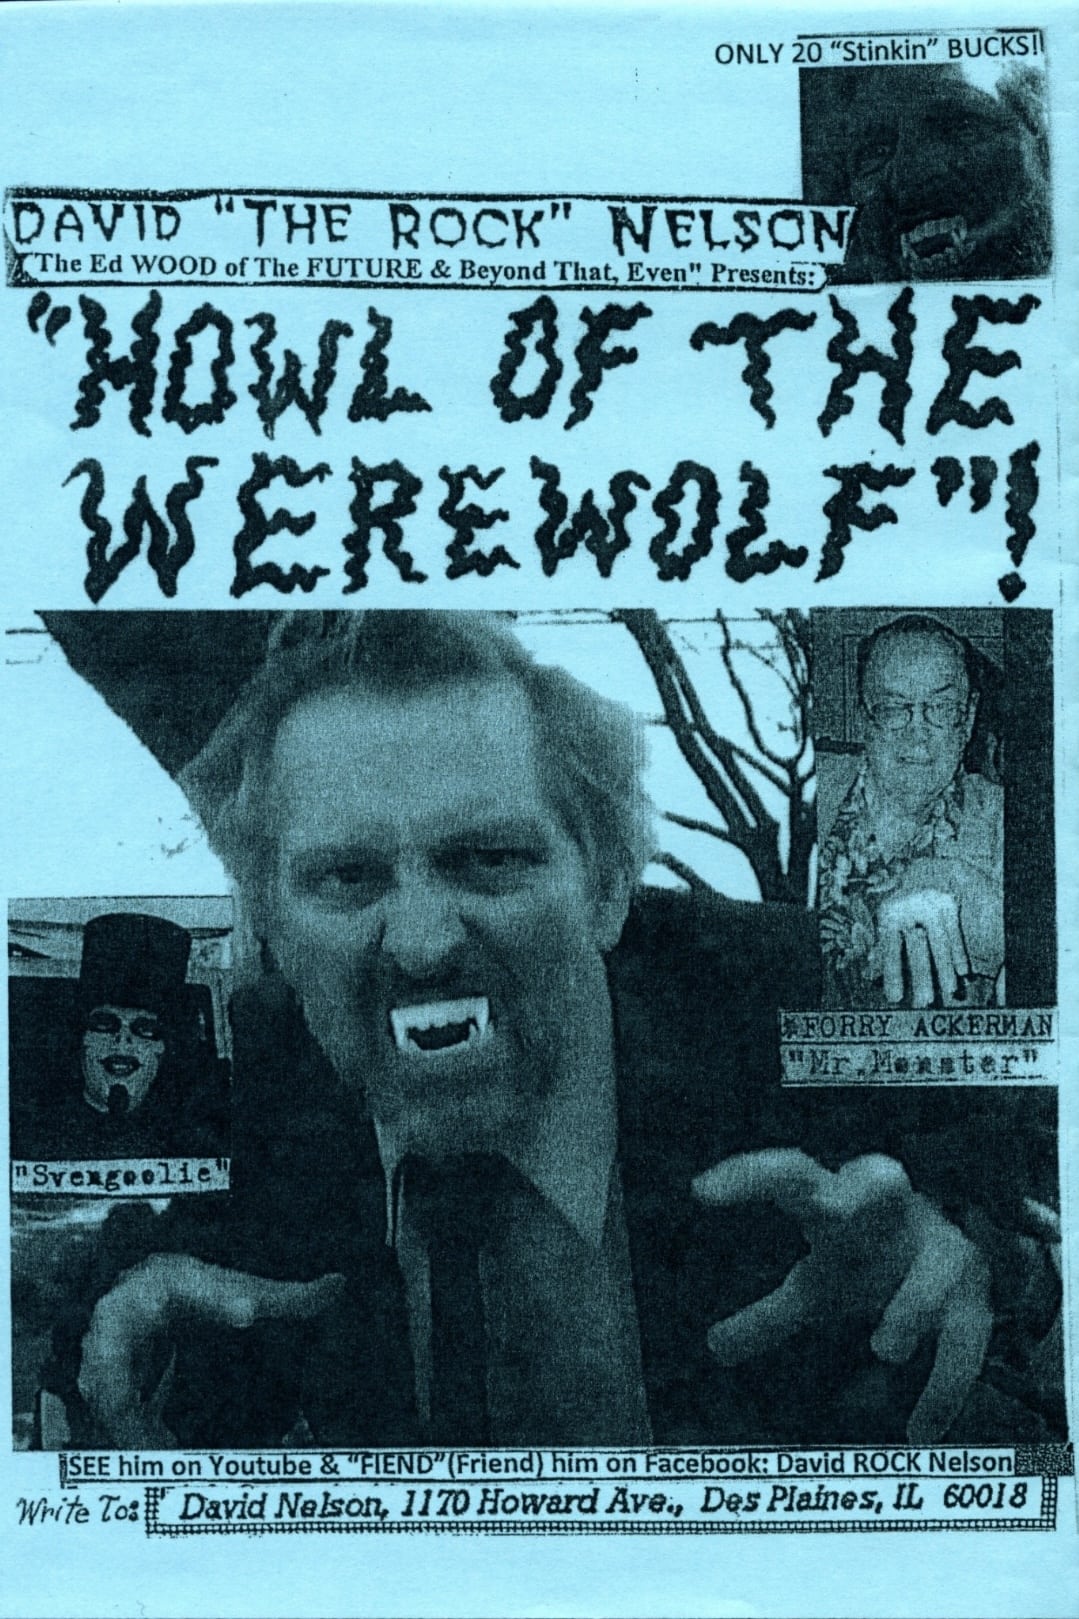 Howl of the Werewolf